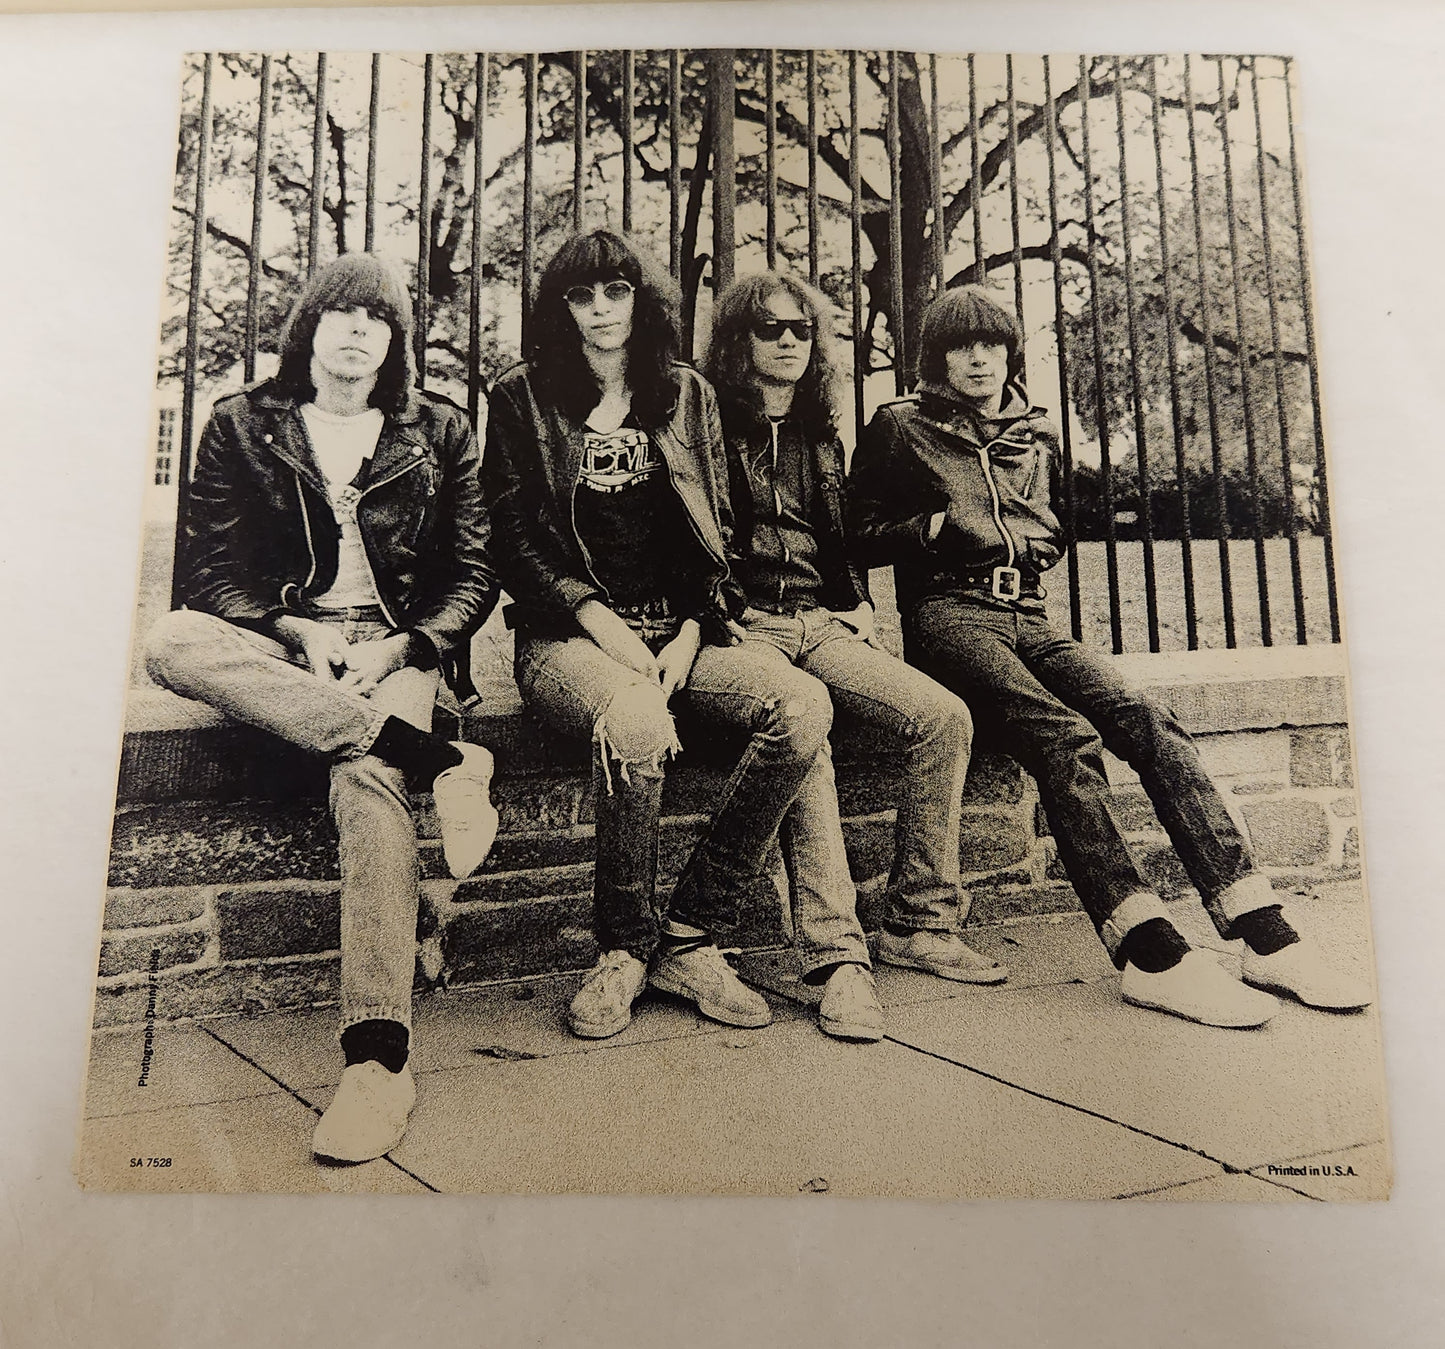 Ramones "Leave Home" 1977 Punk Rock Record Album